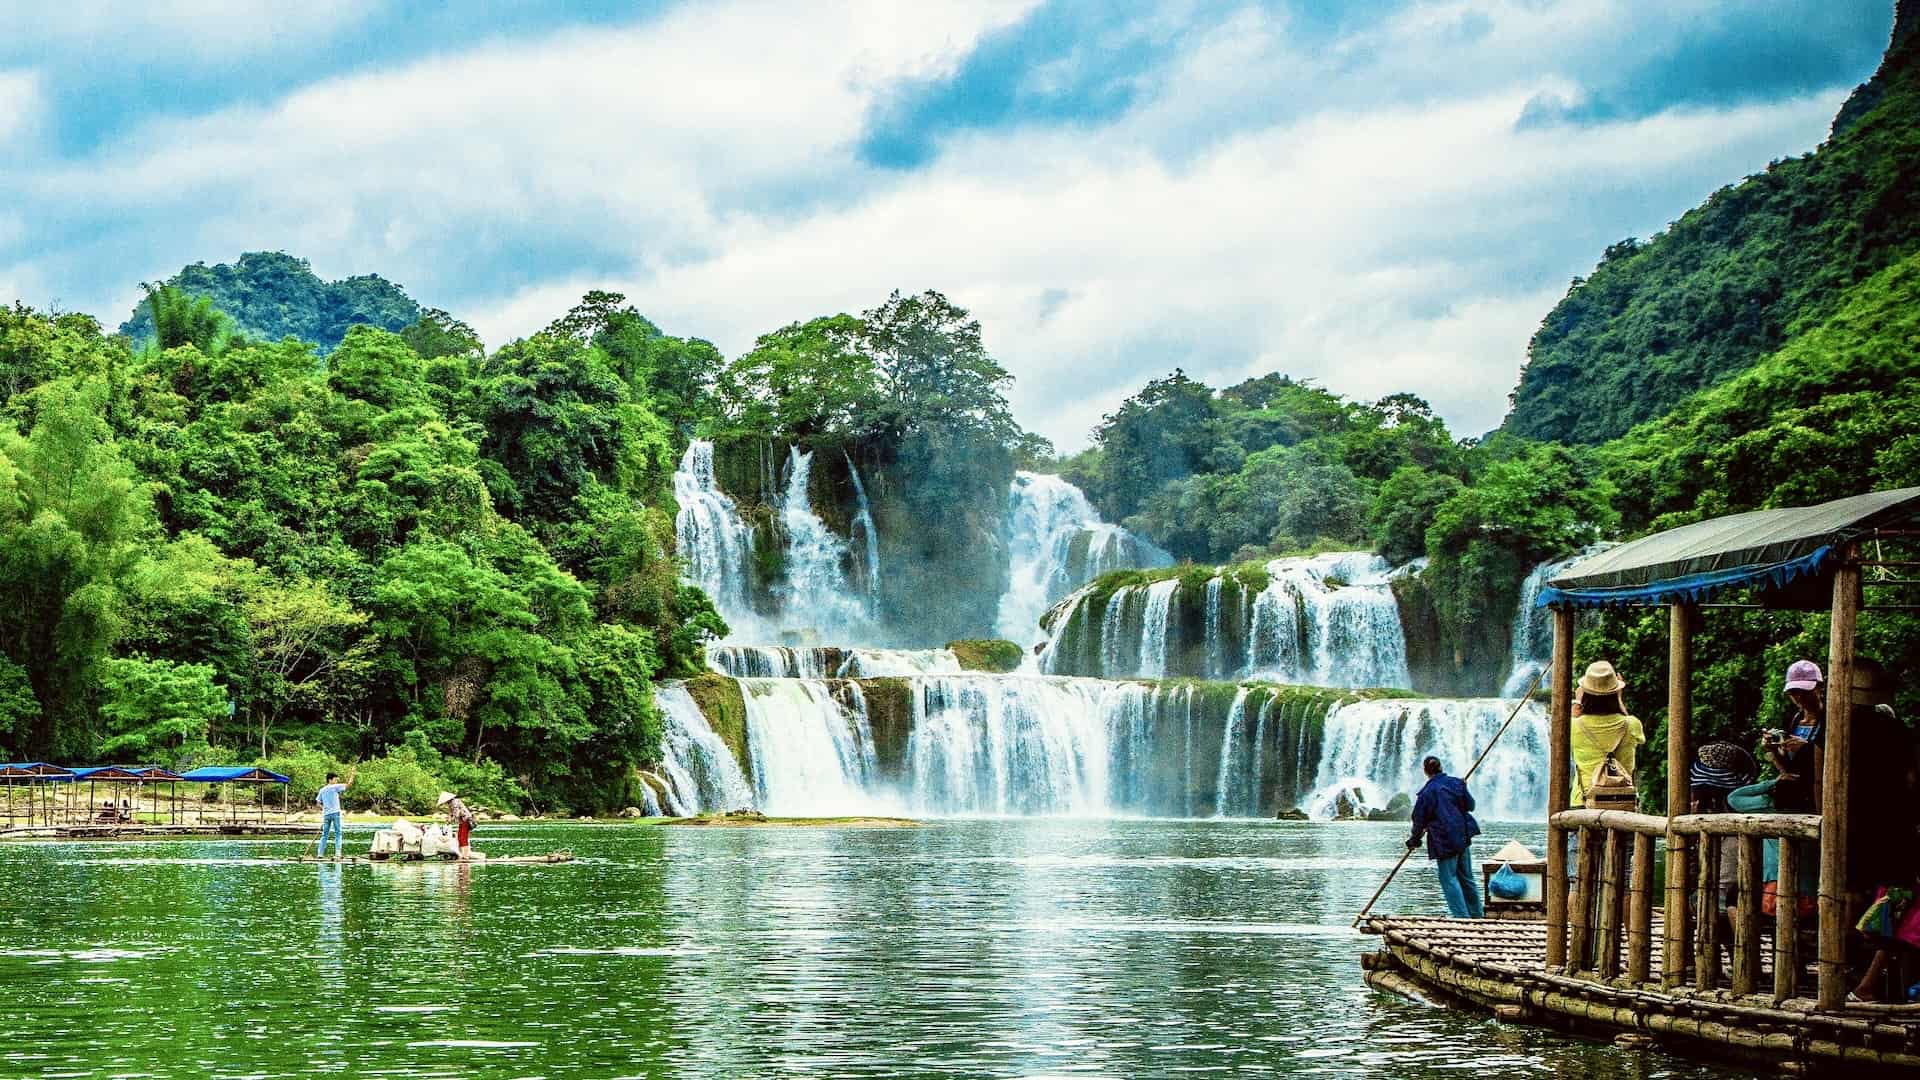 hidden gem ban gioc waterfall is in cao bang province vietnam